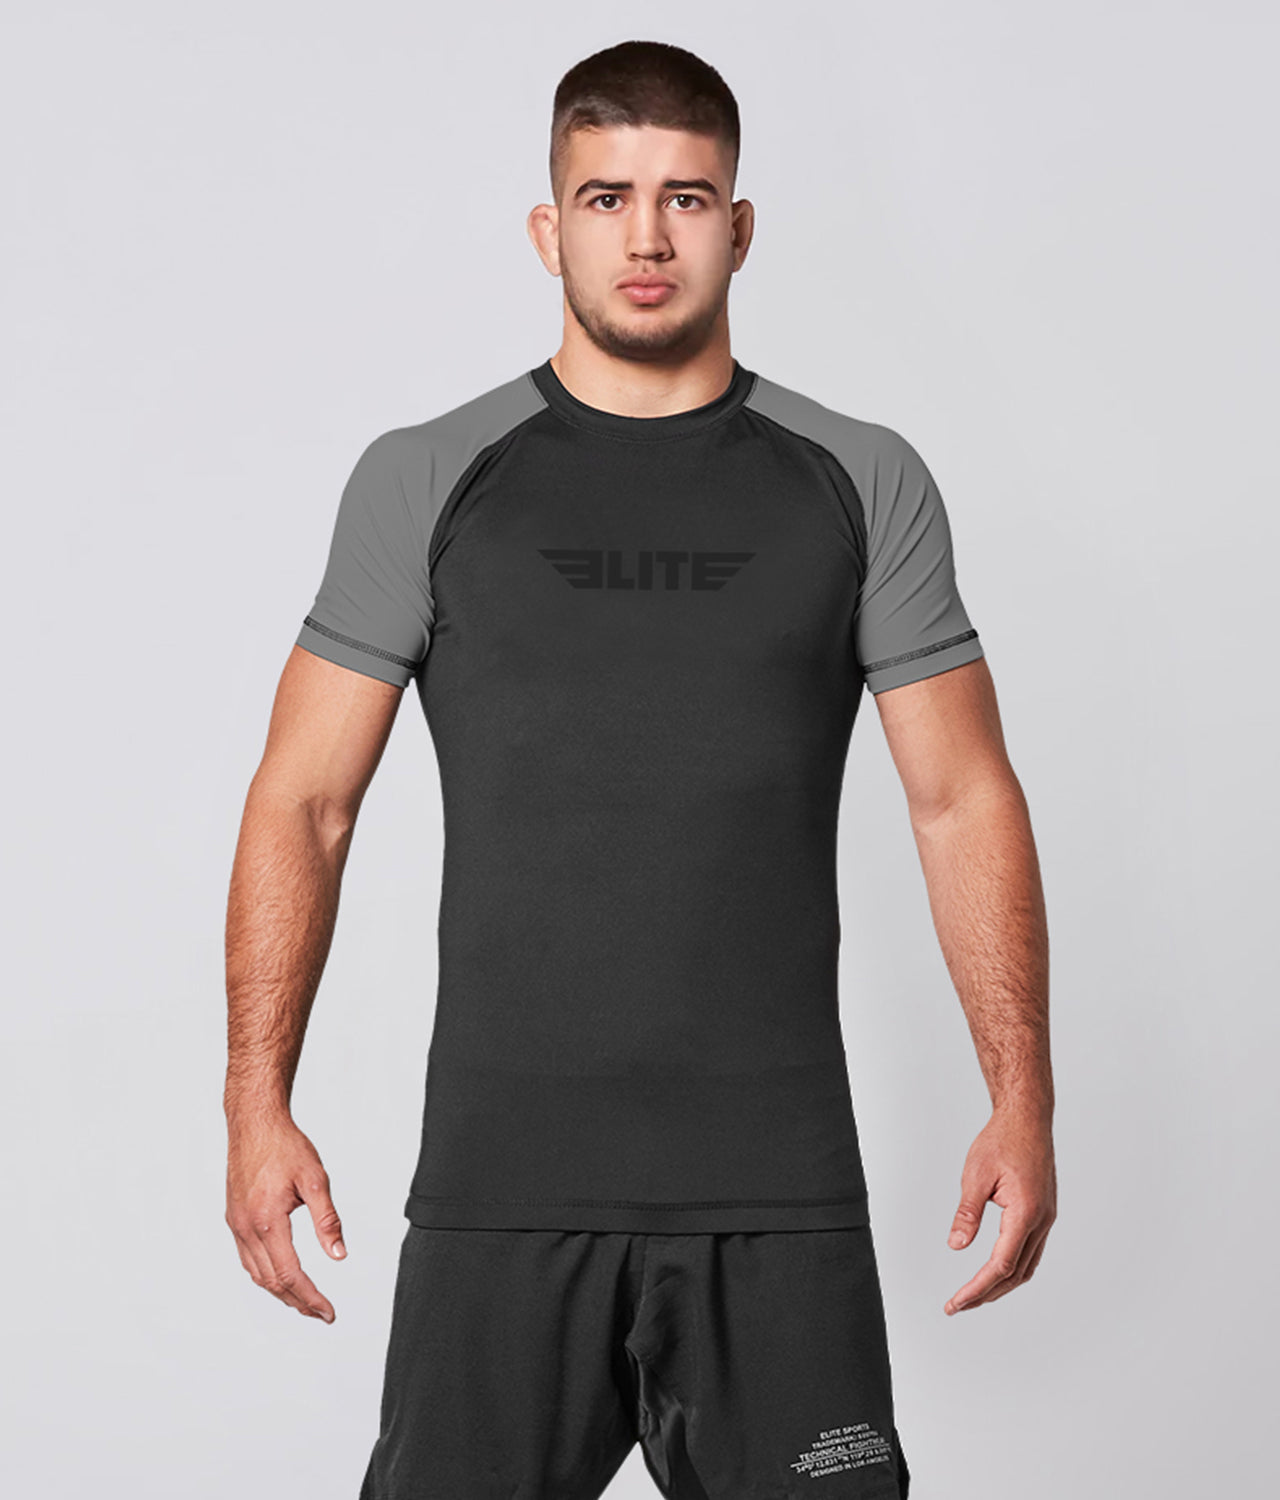 Elite Sports Men's Standard Gray Short Sleeve Jiu Jitsu BJJ Rash Guard